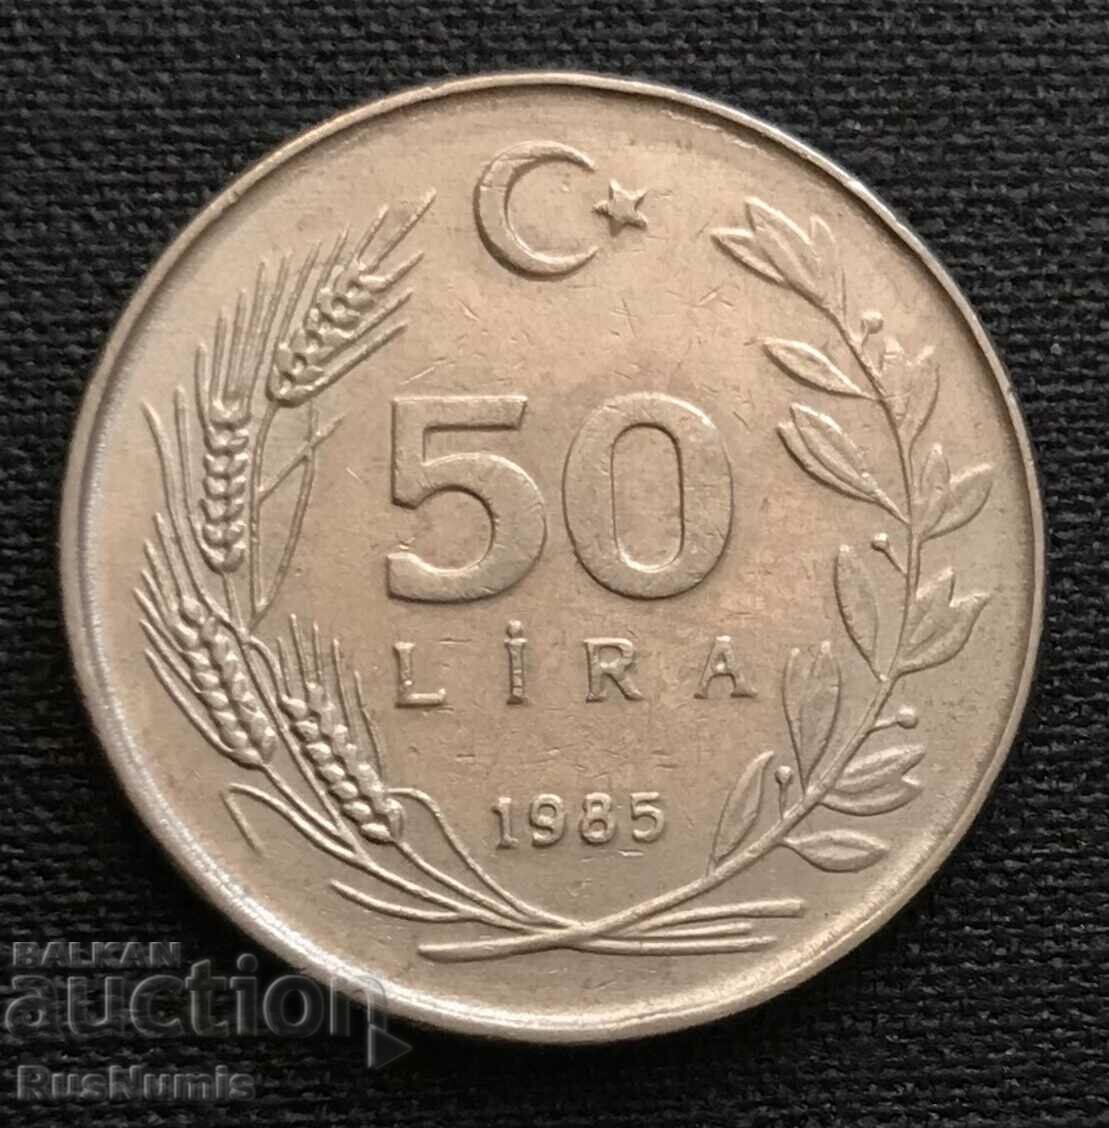 Curcan. 50 de lire sterline 1985